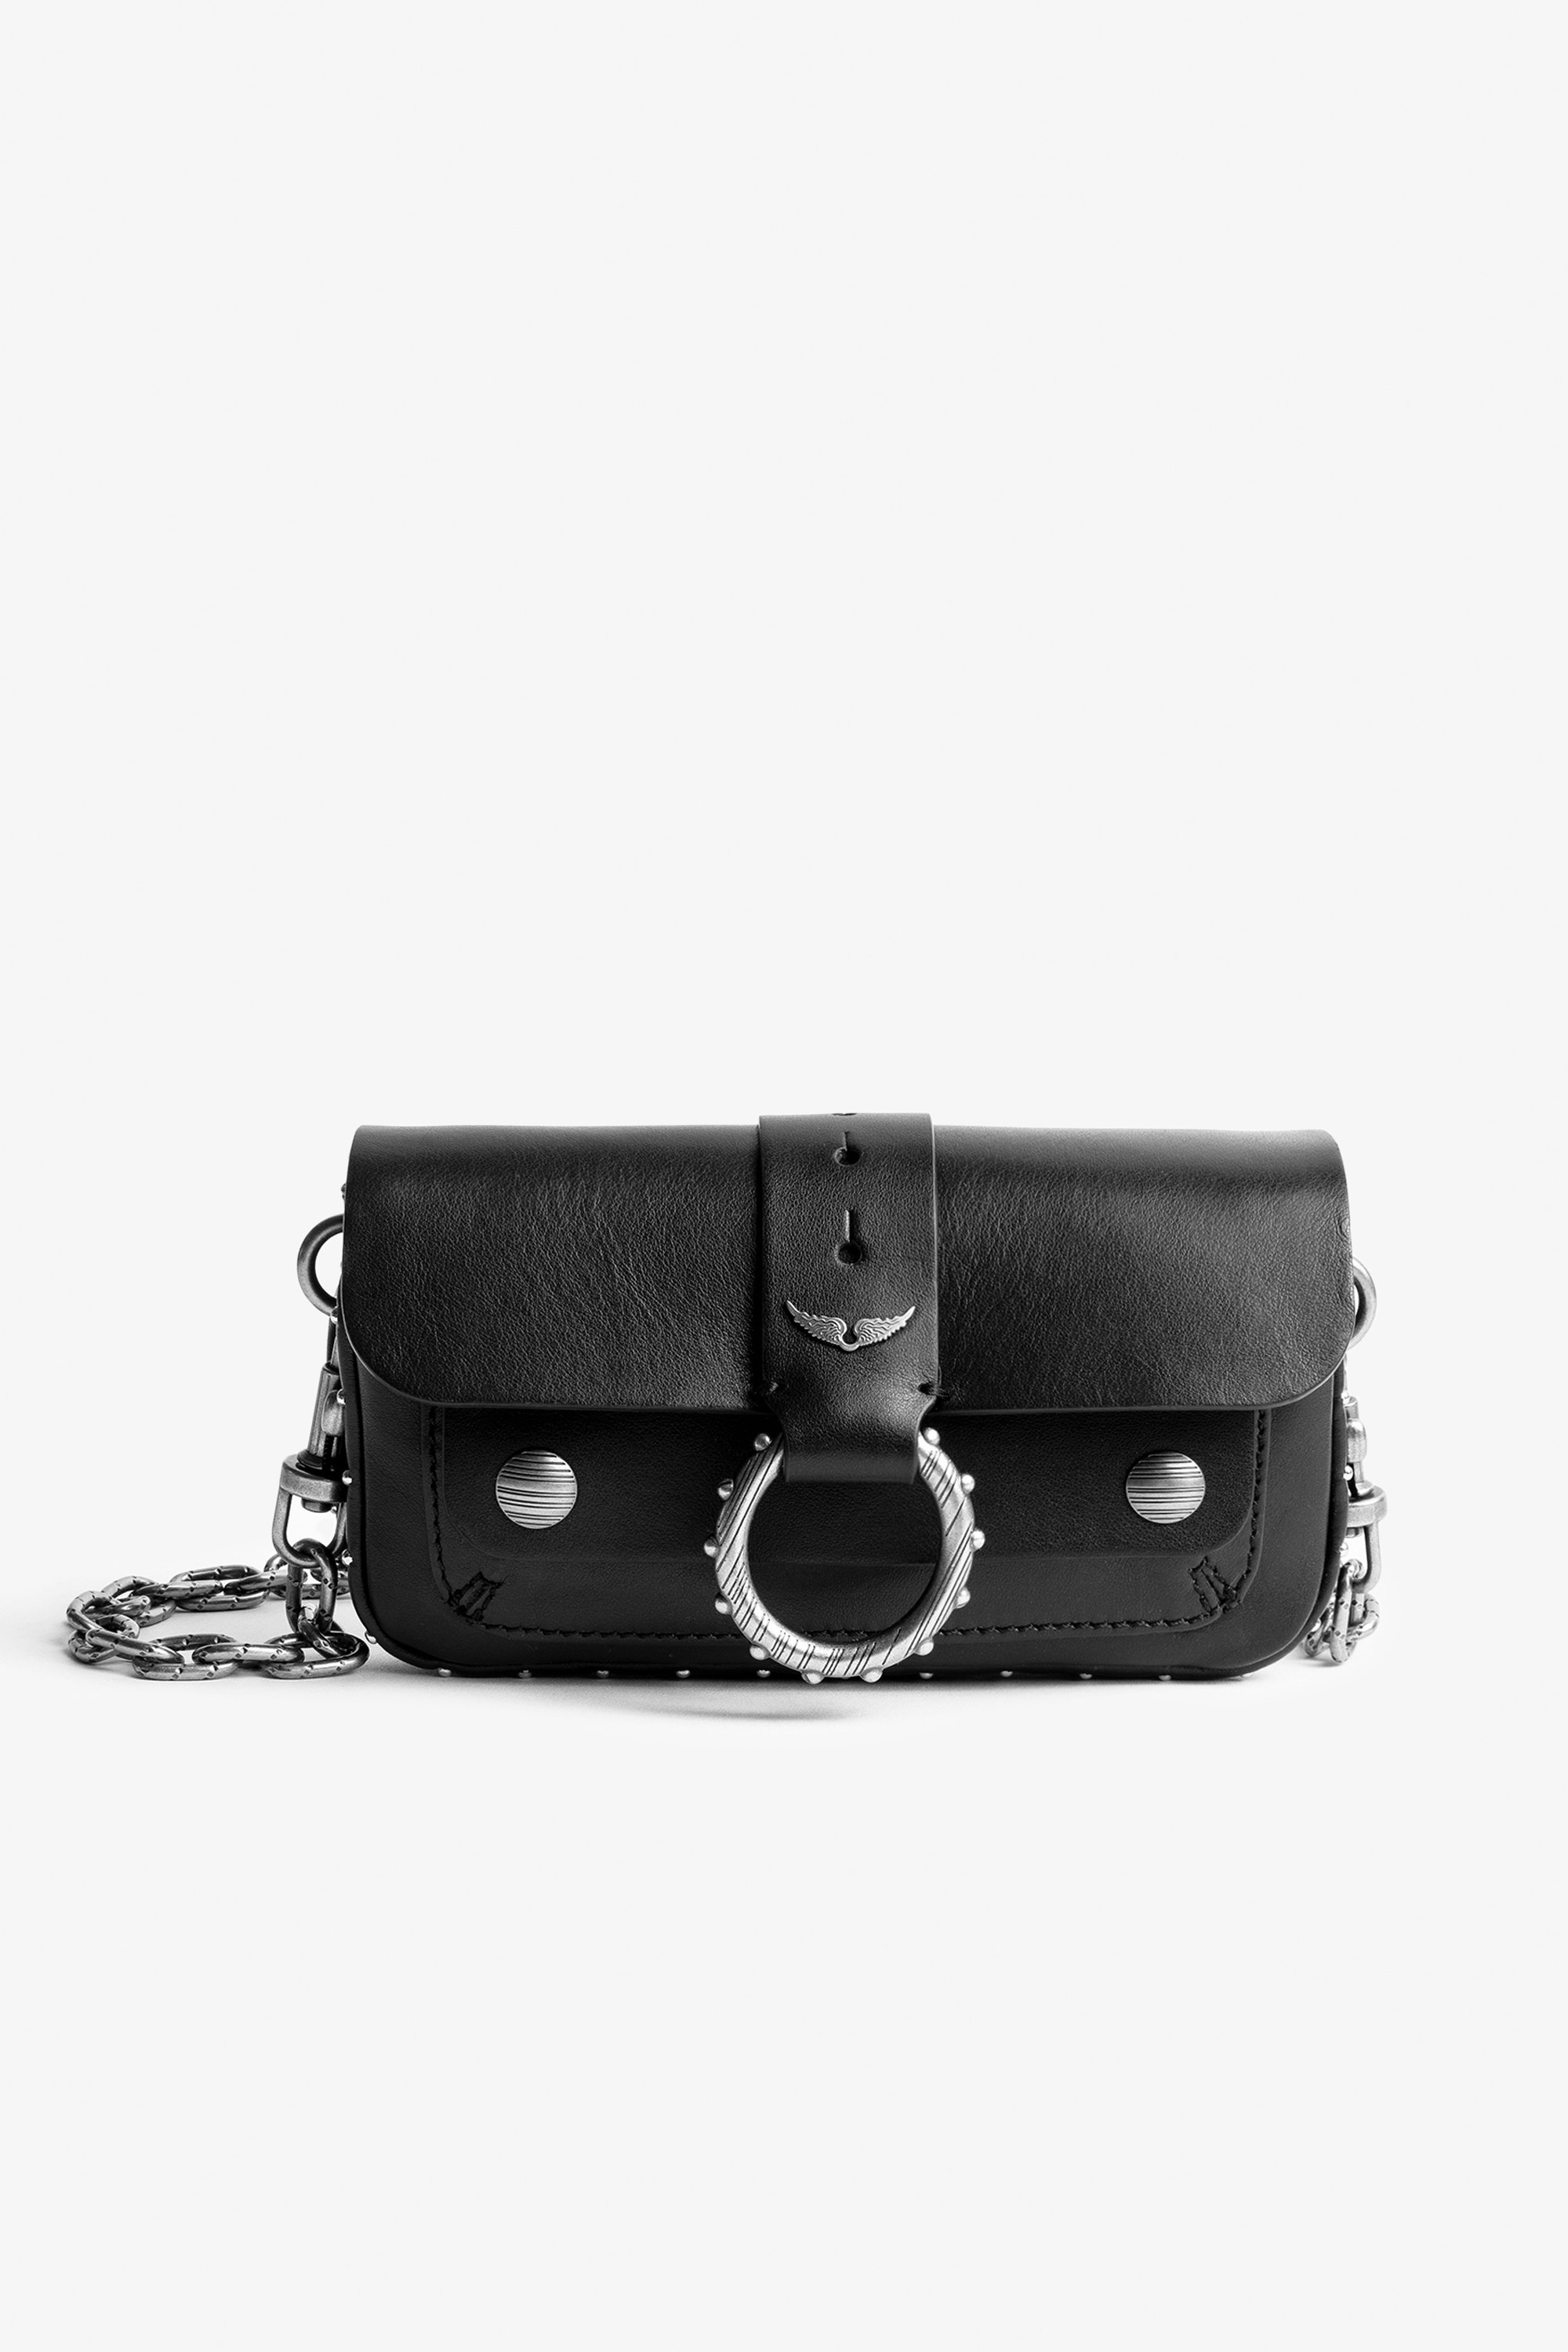 Bolso Kate Wallet - Emblemático bolso Kate Wallet negro de cuero liso para mujer.